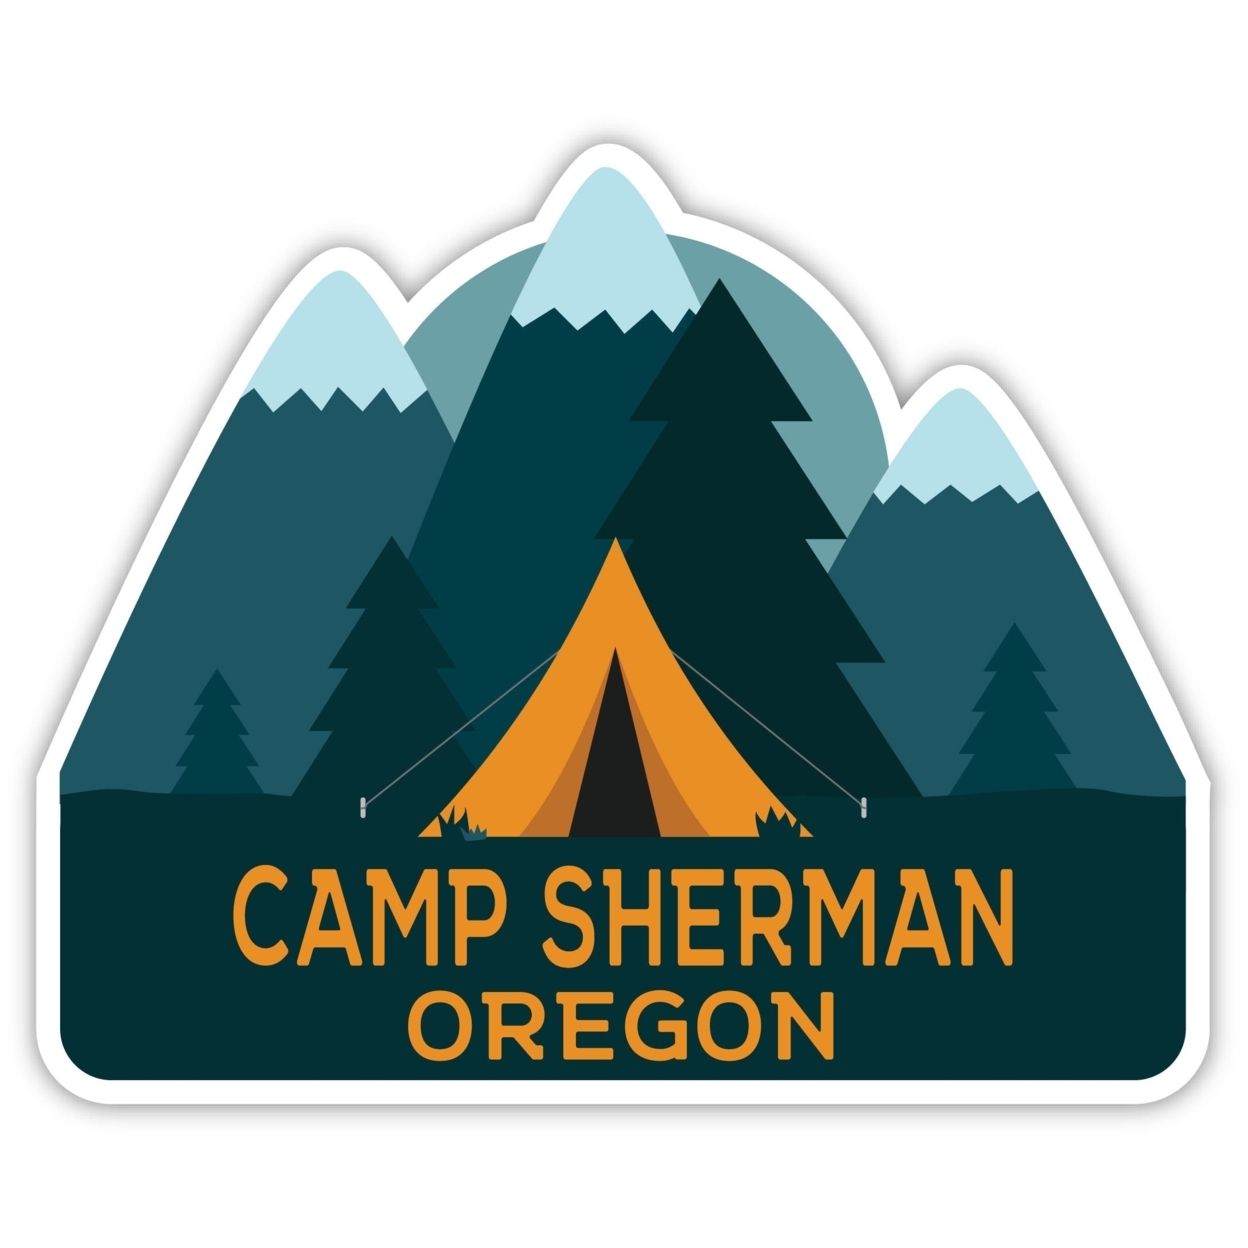 Camp Sherman Oregon Souvenir Decorative Stickers (Choose Theme And Size) - 4-Pack, 10-Inch, Tent